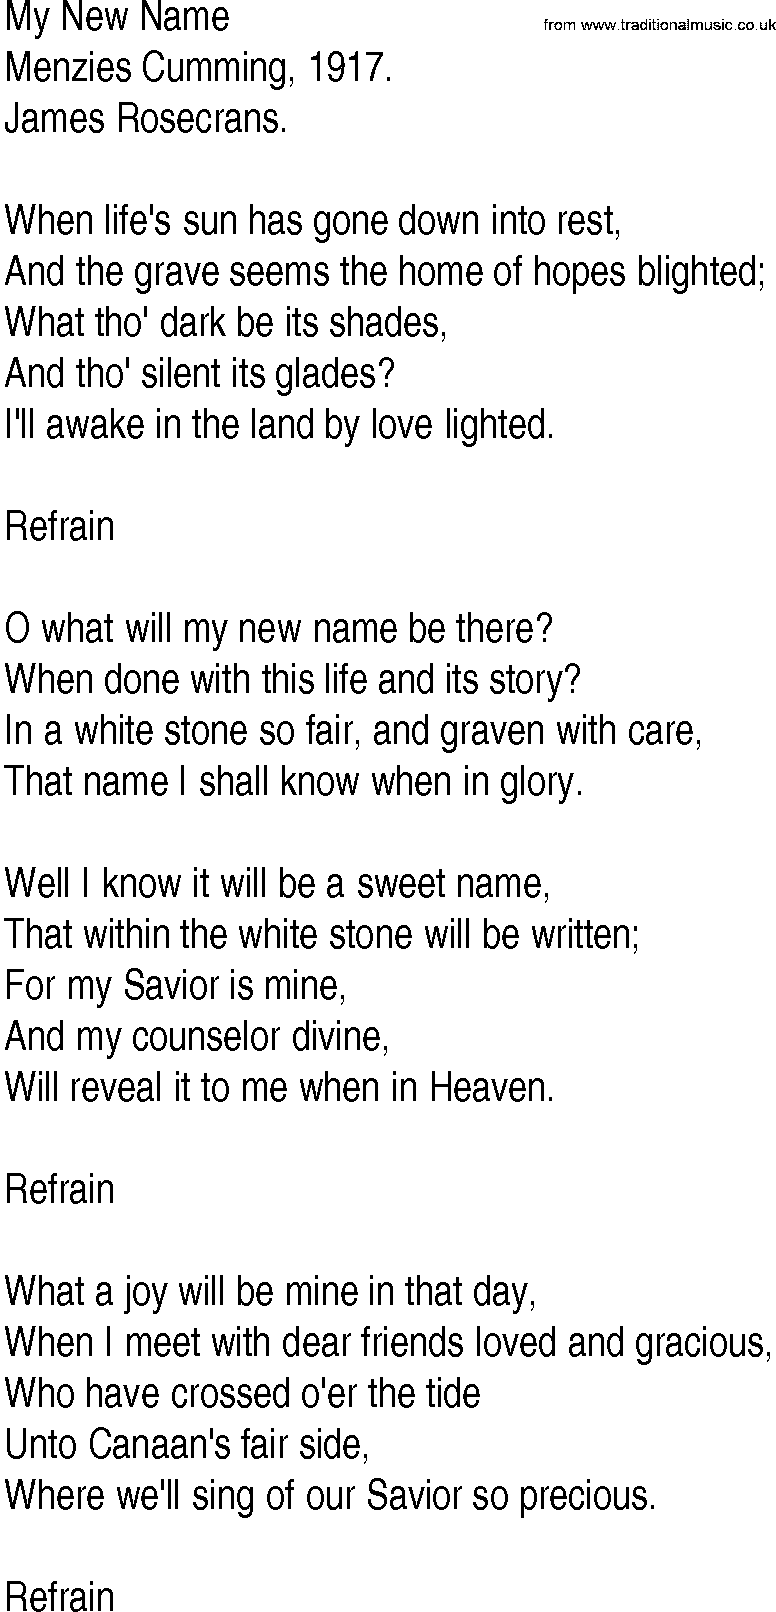 Hymn and Gospel Song: My New Name by Menzies Cumming lyrics